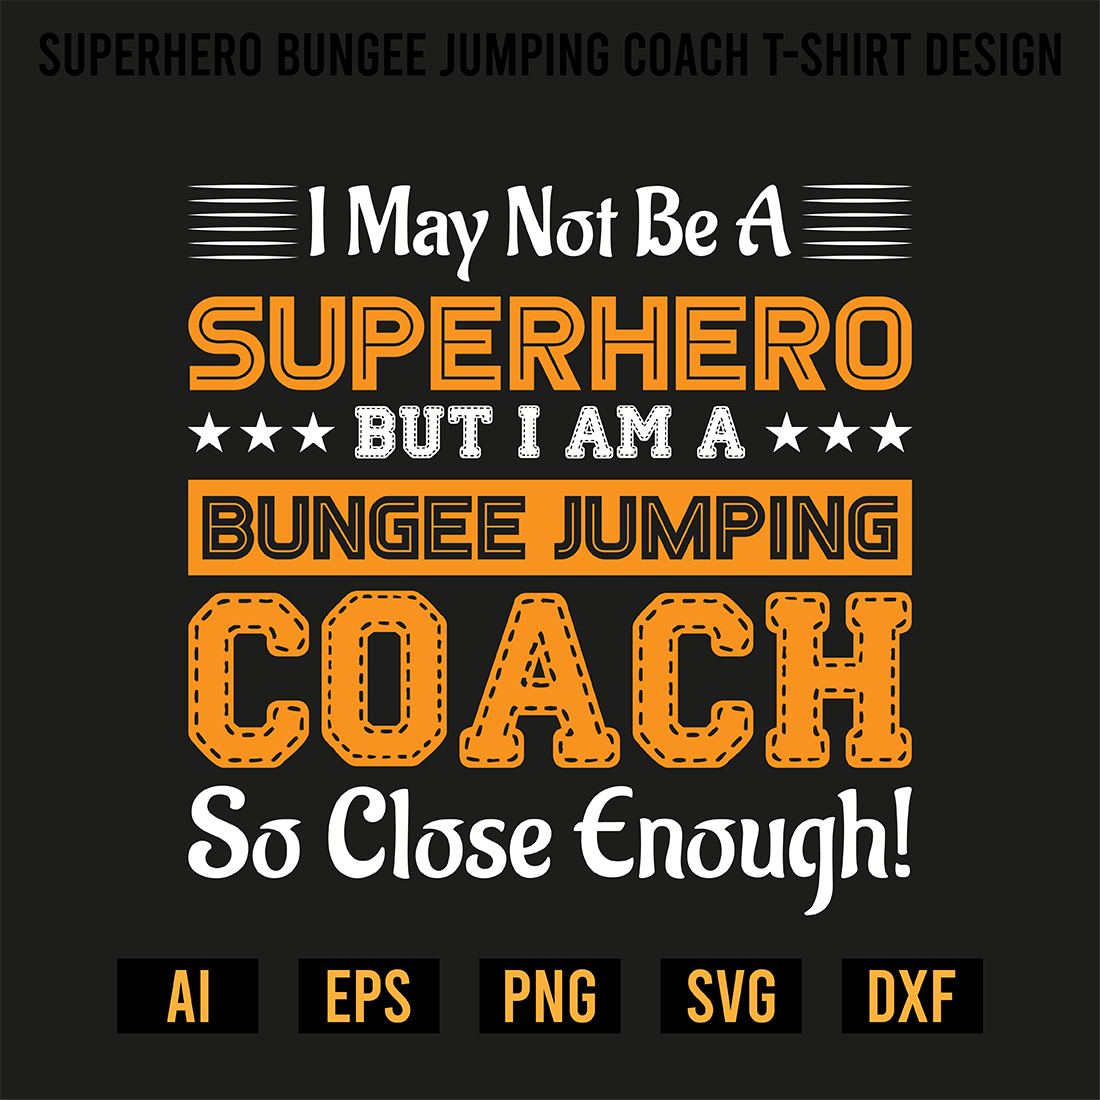 Superhero Bungee Jumping Coach T-Shirt Design preview image.